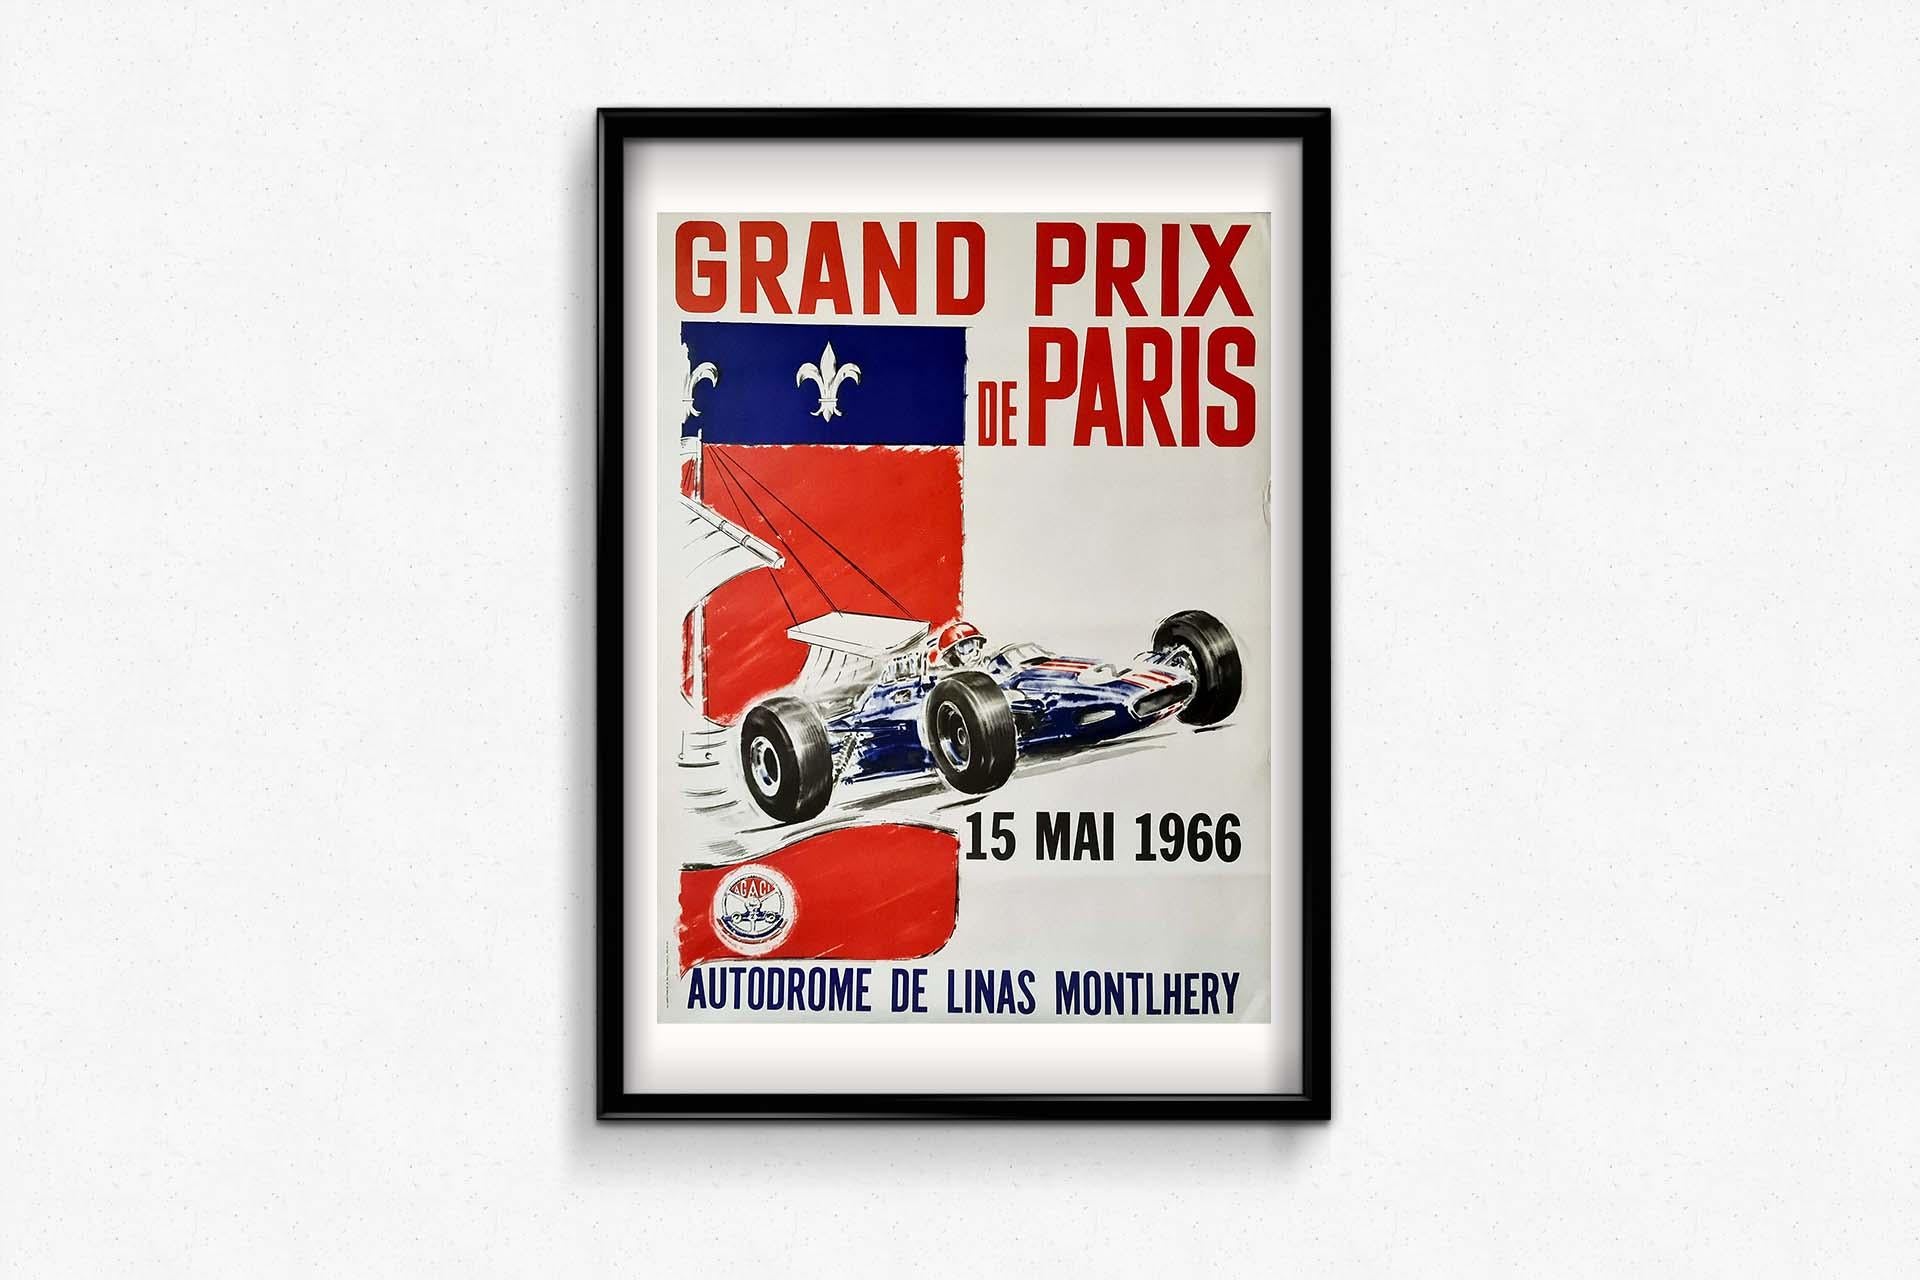 Poster for the 1966 Paris Grand Prix at the Autodrome de Linas Montlhery For Sale 2